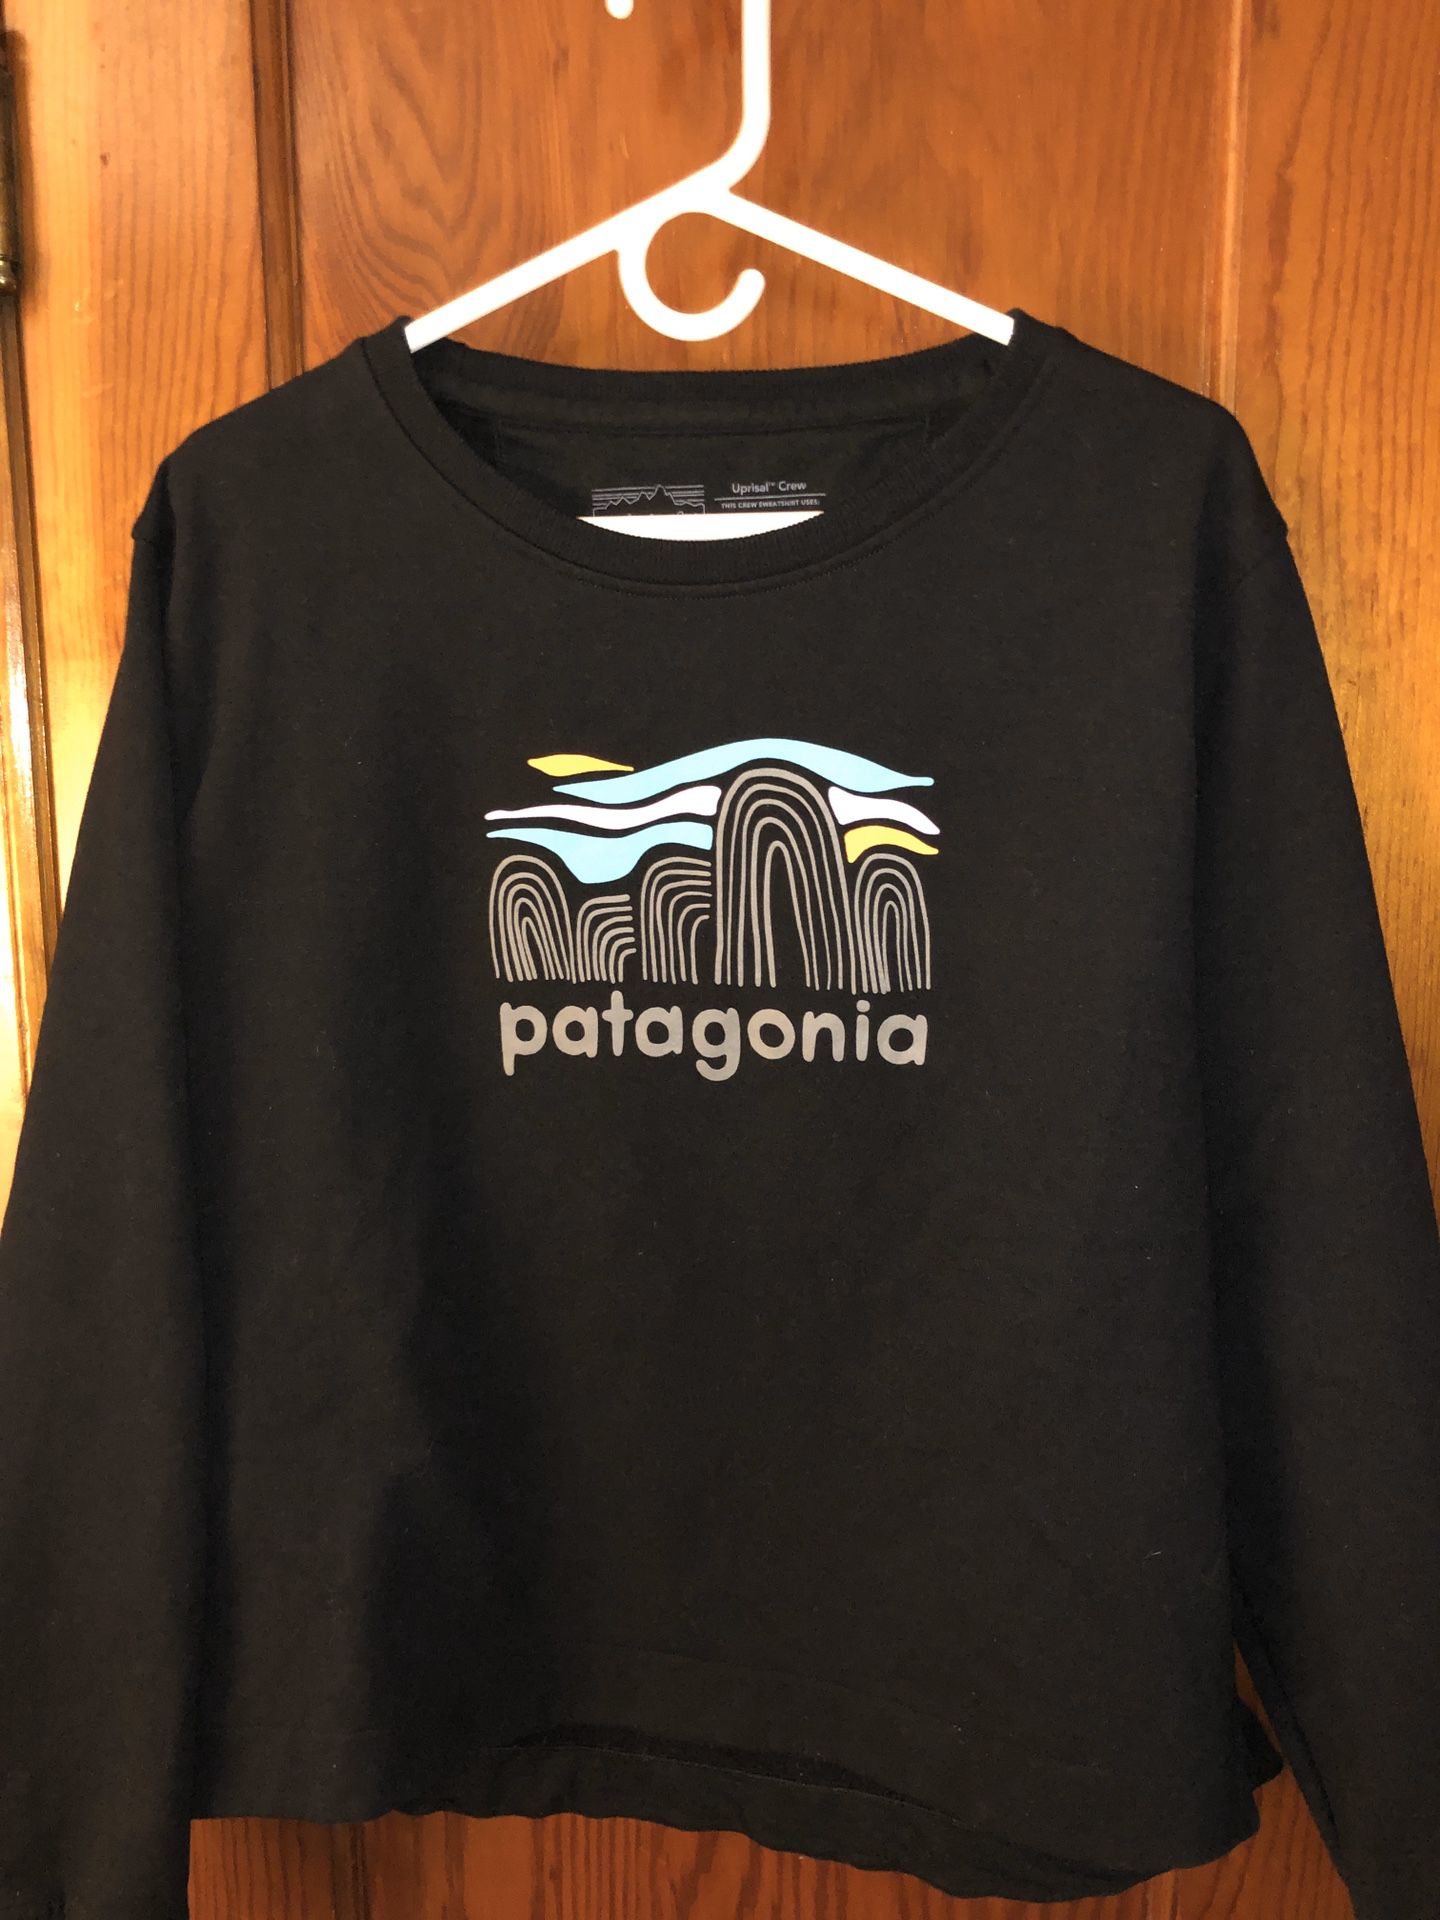 Crew neck Patagonia sweatshirt